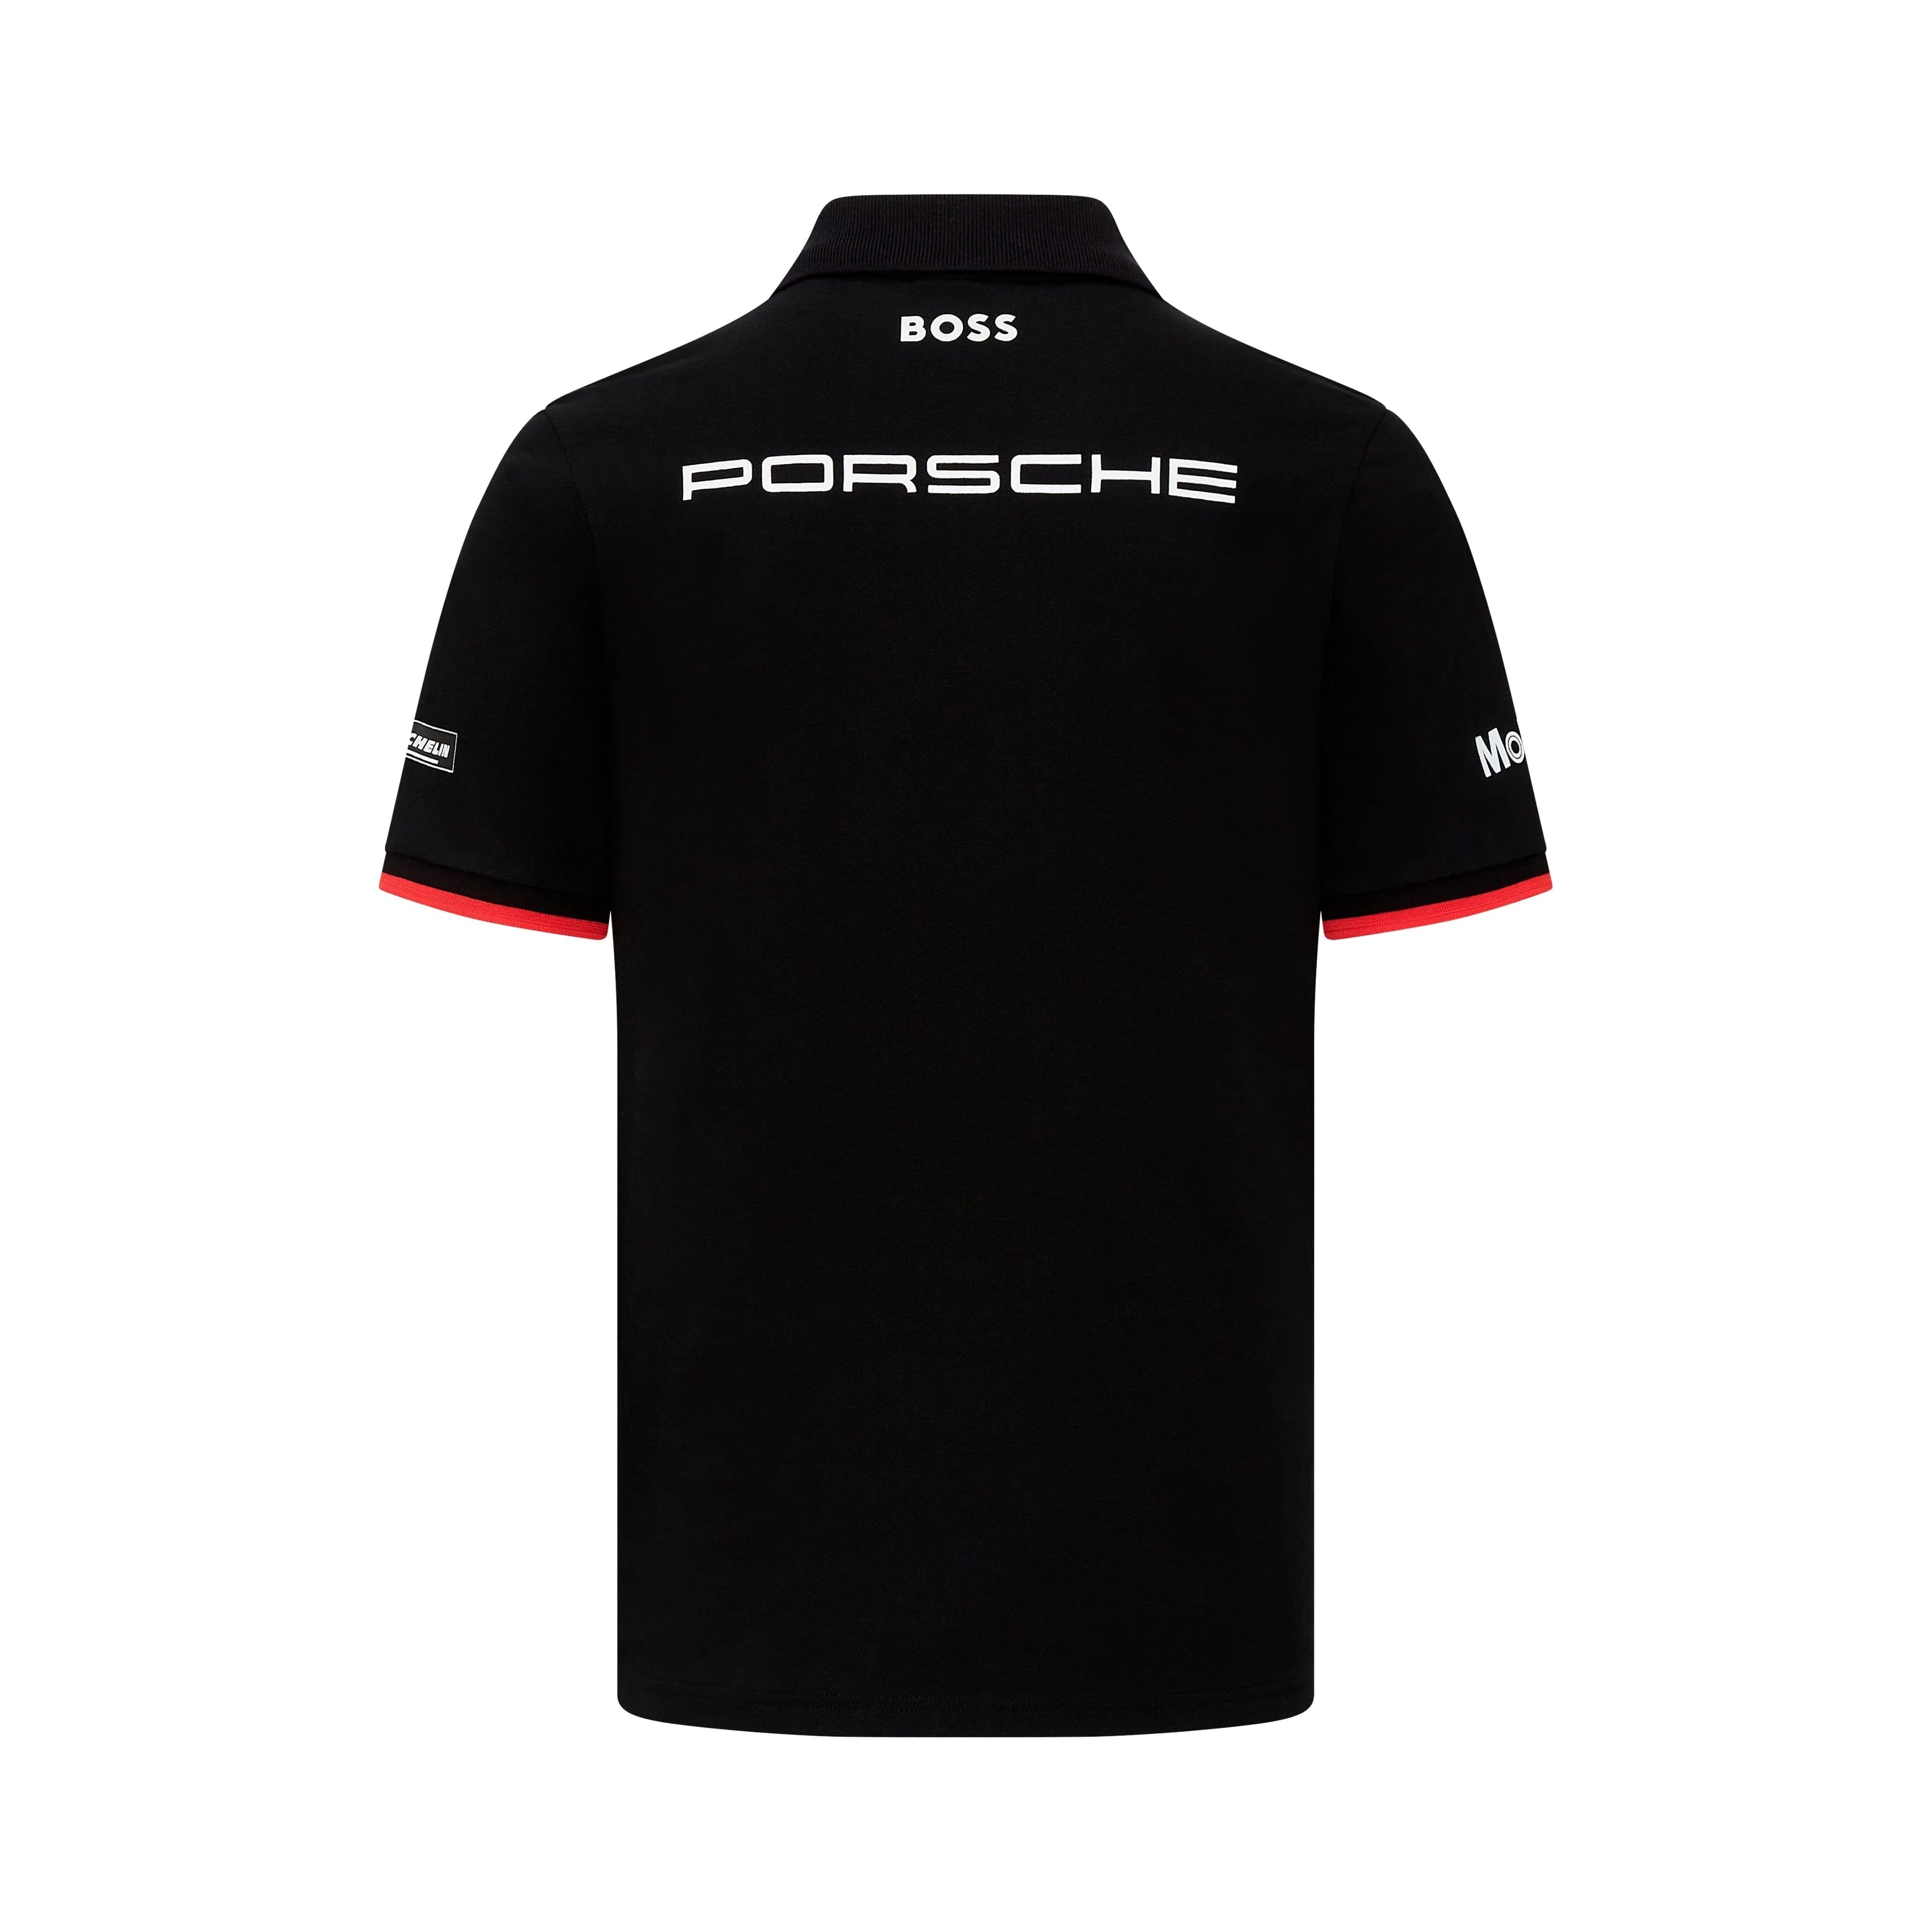 Porsche Motorsport Men's Team Polo Shirt Black